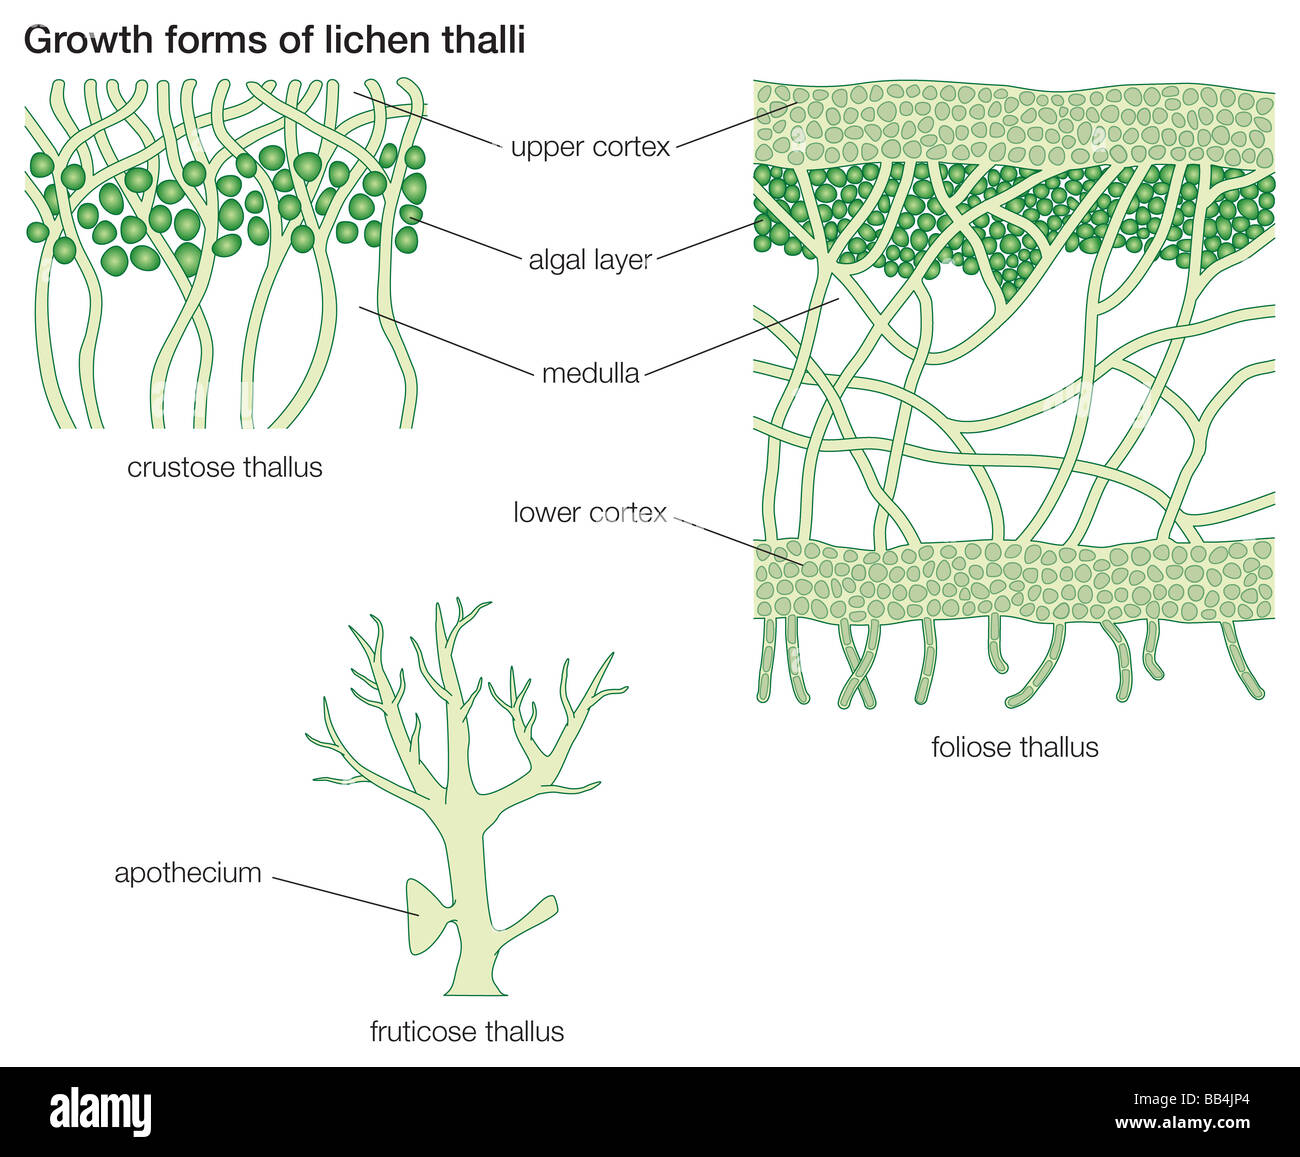 Growth forms of lichen thalli Stock Photo